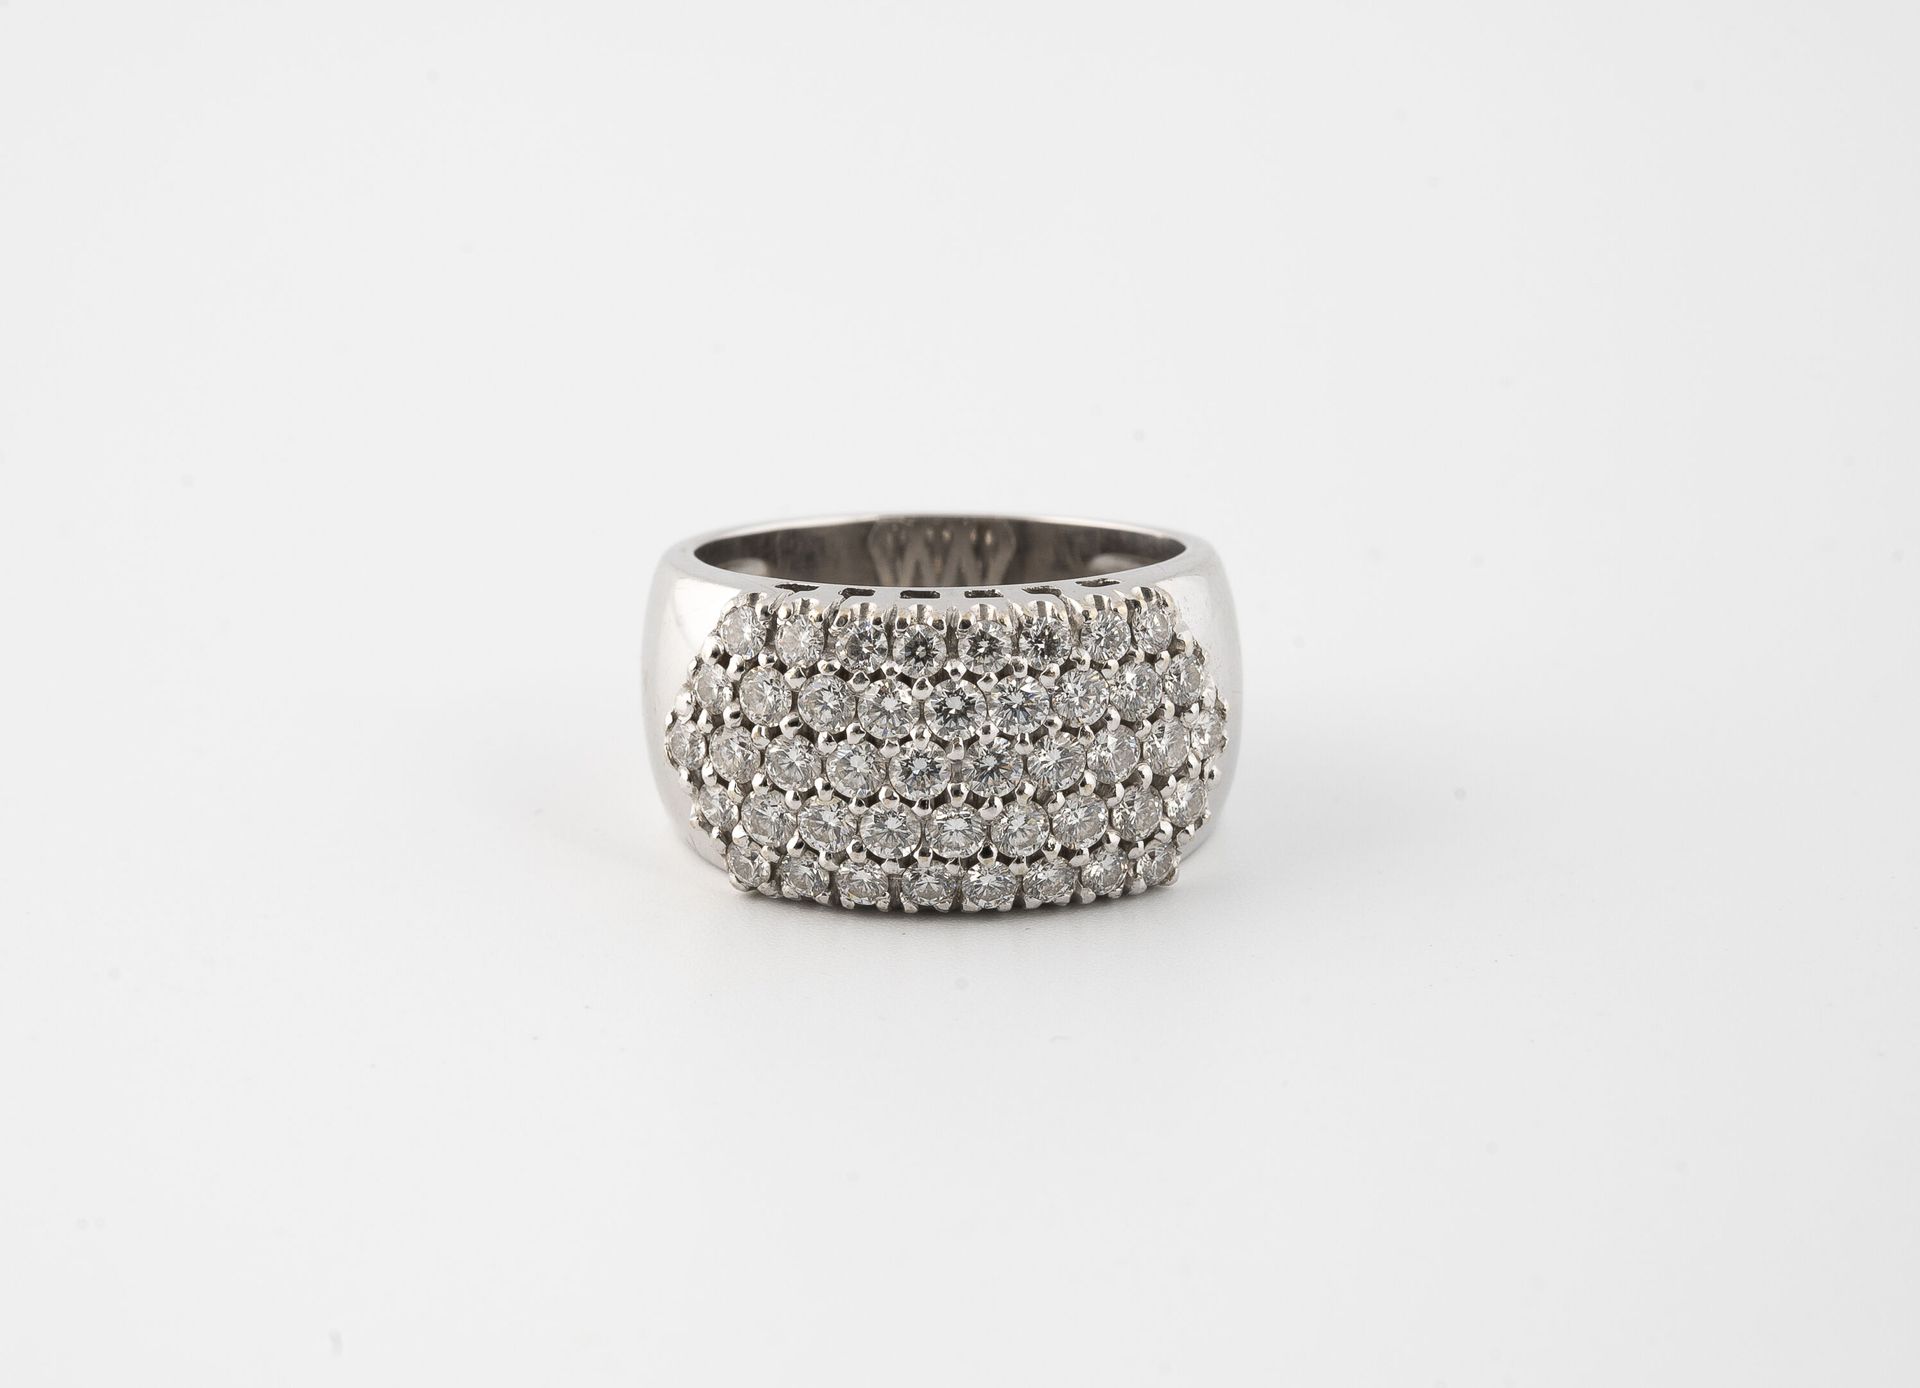 Null 白金（750）戒指，镶嵌明亮式切割钻石。

毛重：9.3克 - 手指大小：50。

刮伤和擦伤。